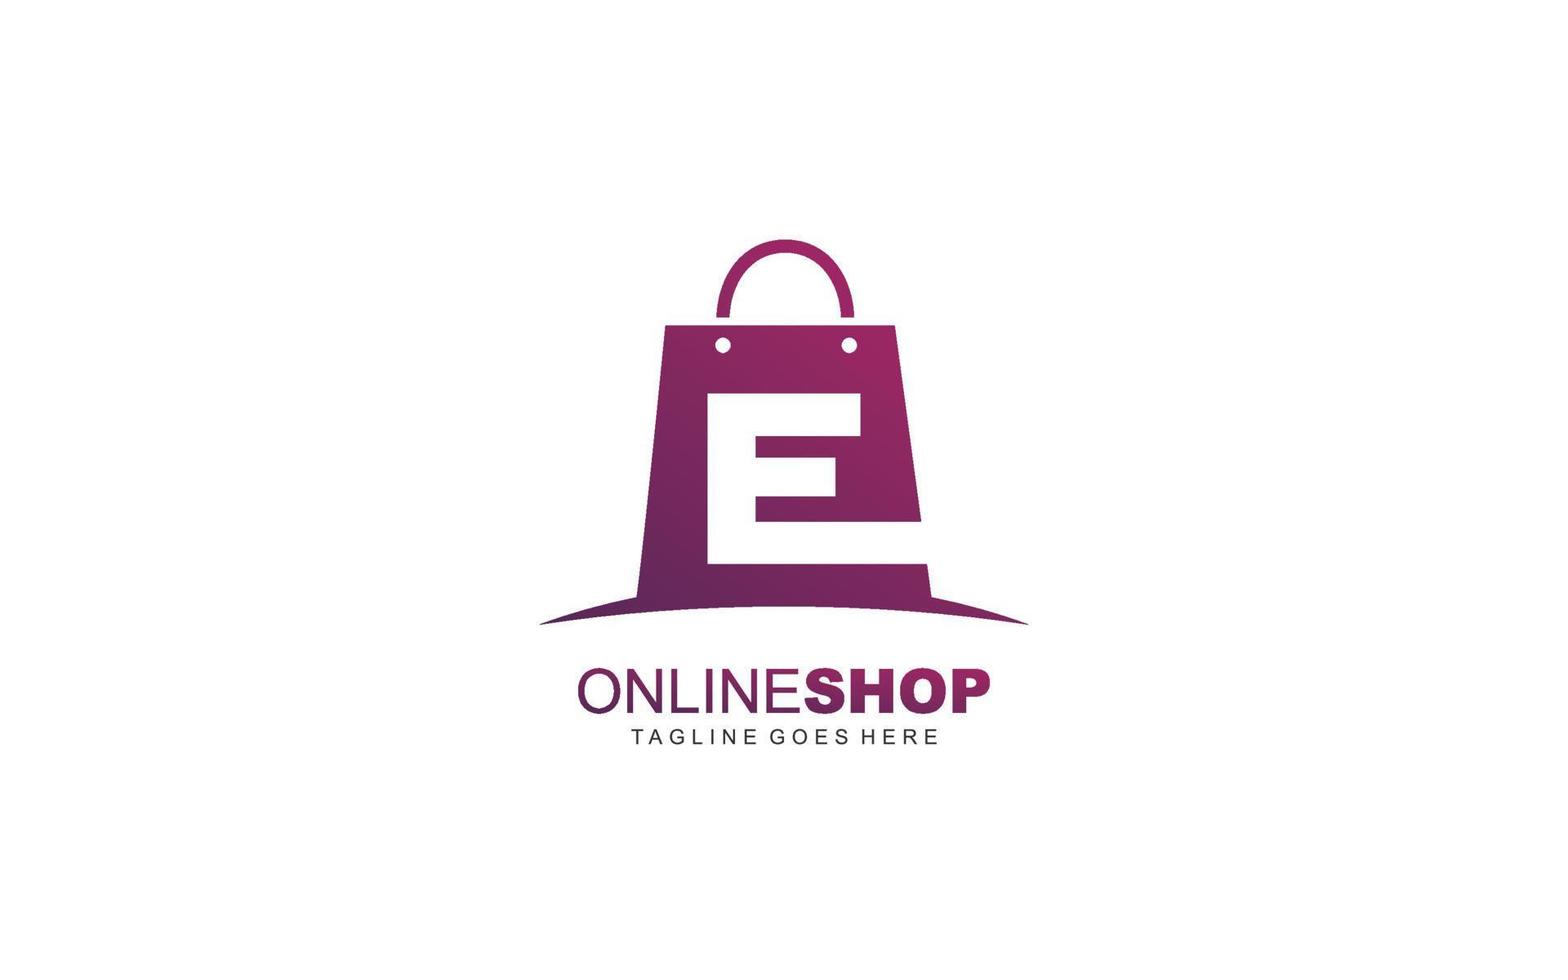 E logo online shop for branding company. BAG template vector illustration for your brand.